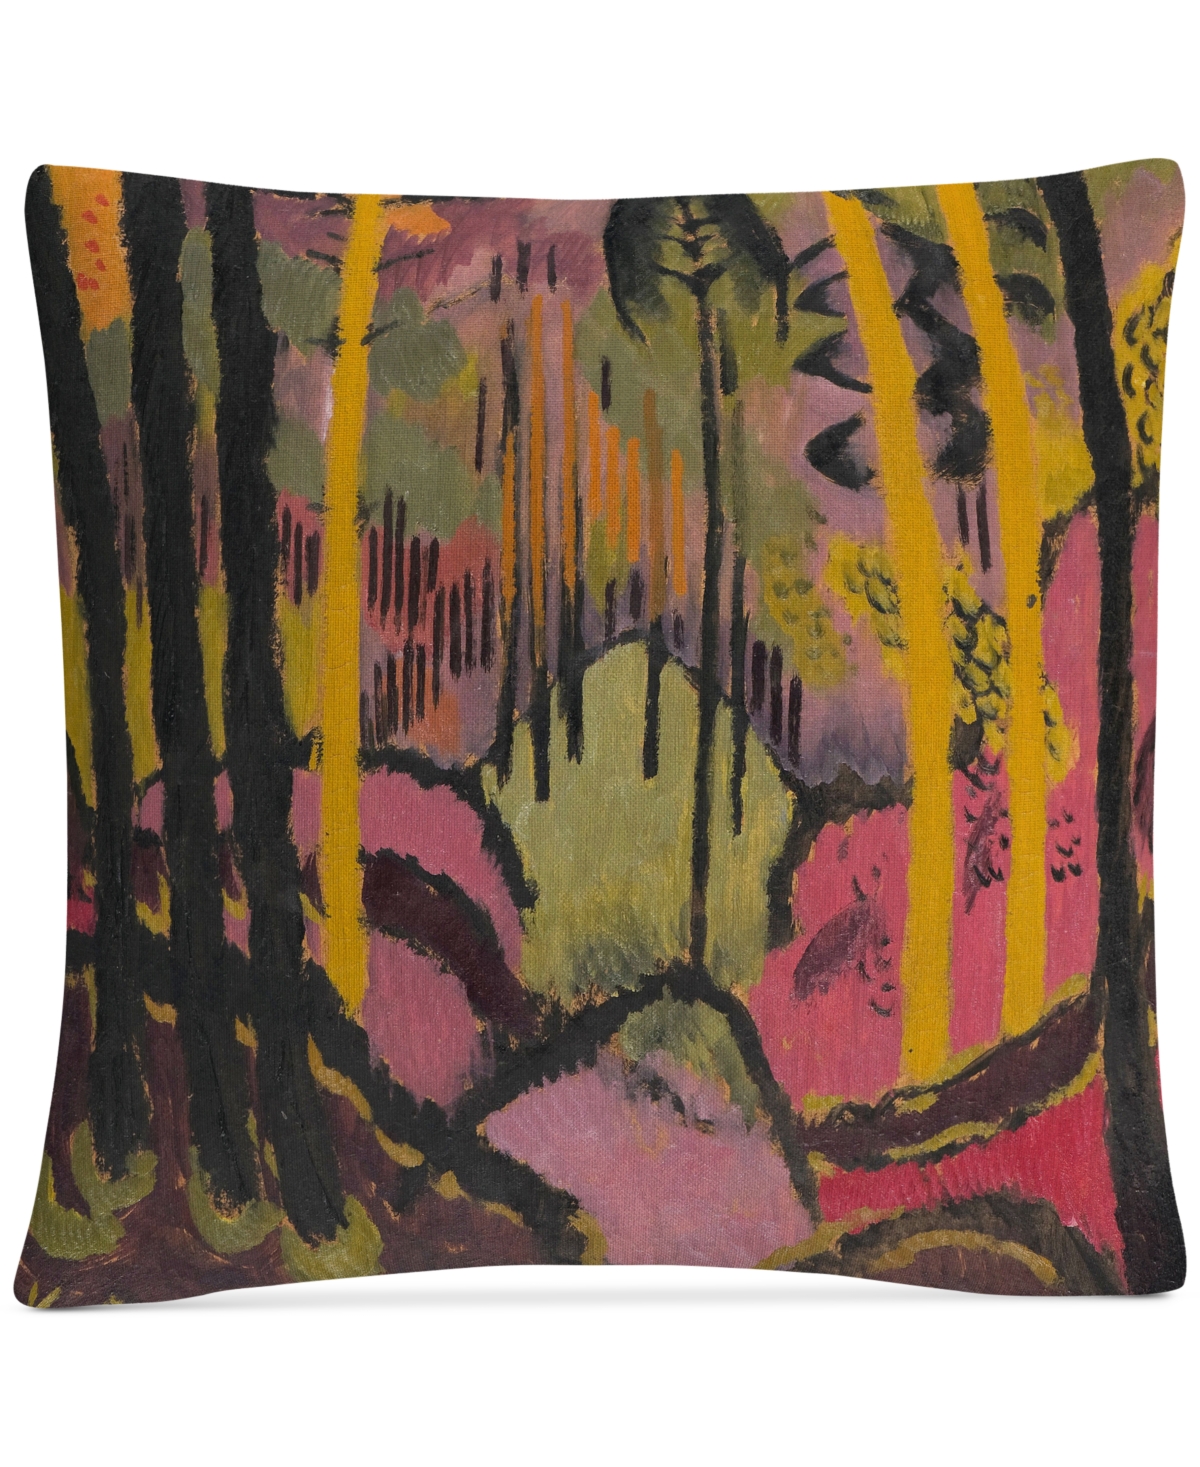 Johann Walters Trunks And Foliage Decorative Pillow, 16 x 16